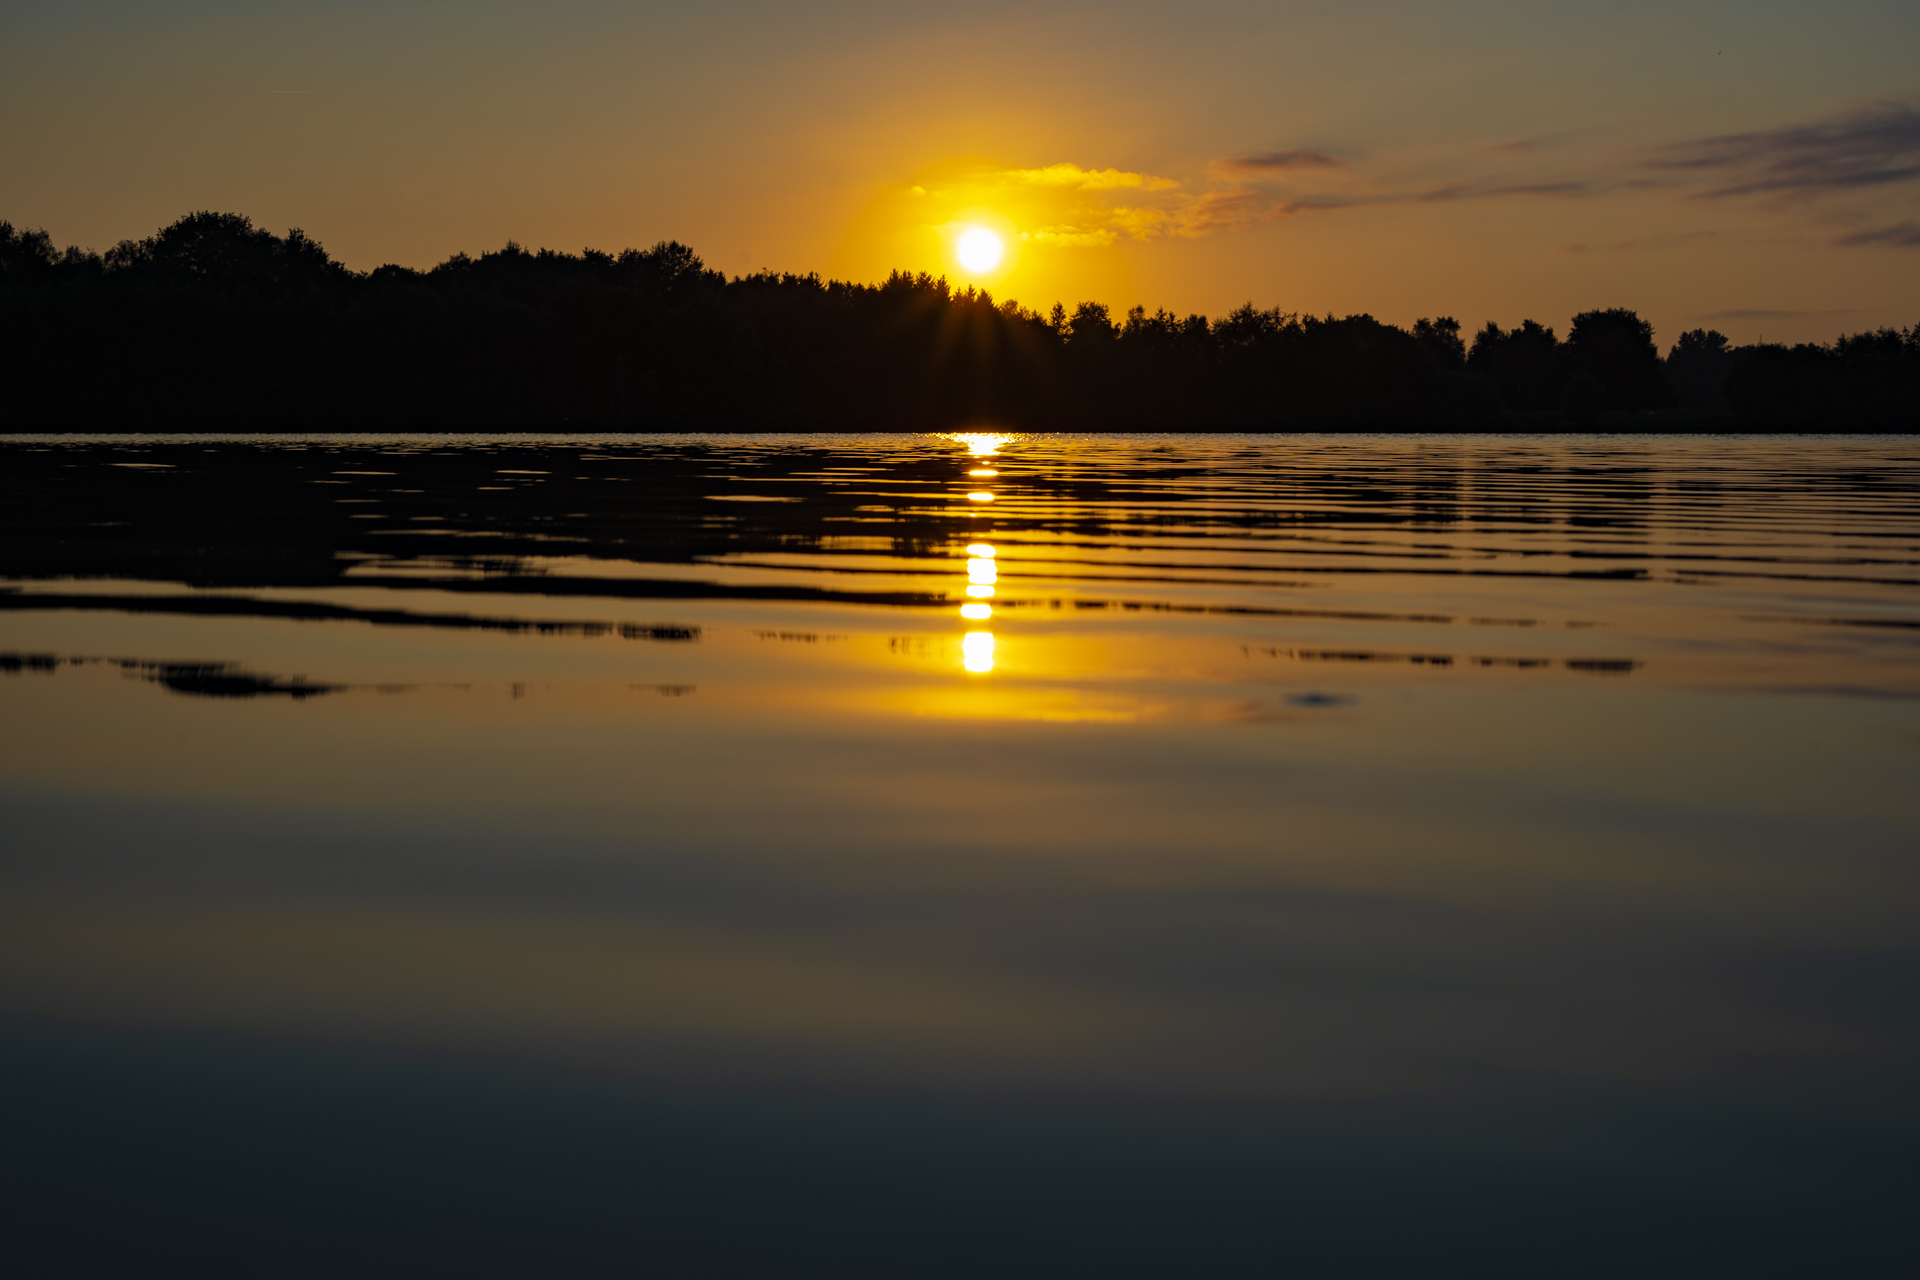 Sonnenuntergang am See, Copyright Stephan Siemon